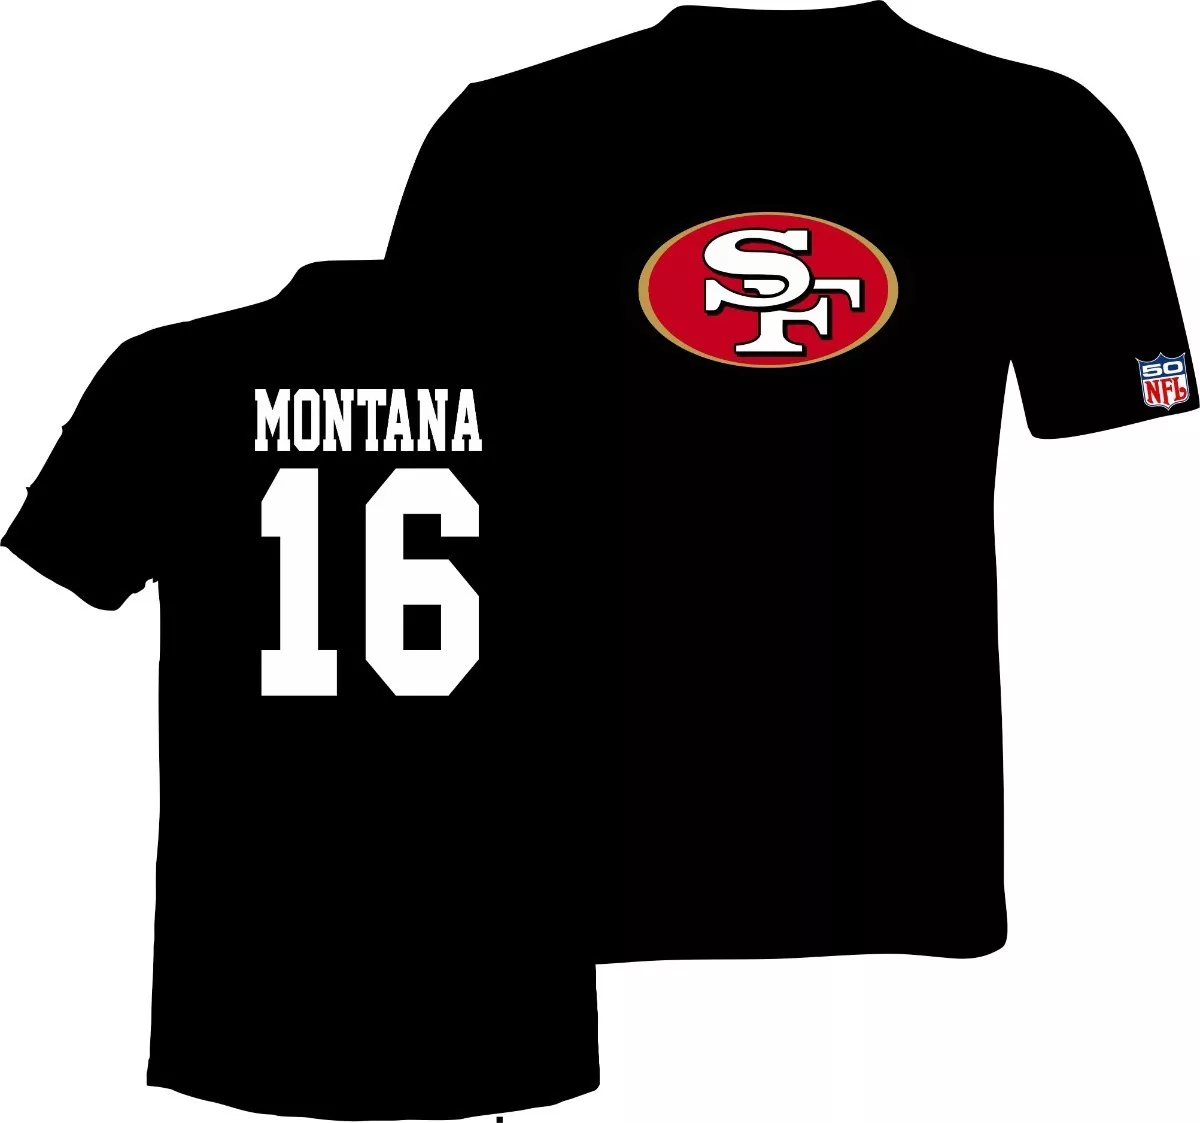 Playera San Francisco. 49ers. Joe Montana Black